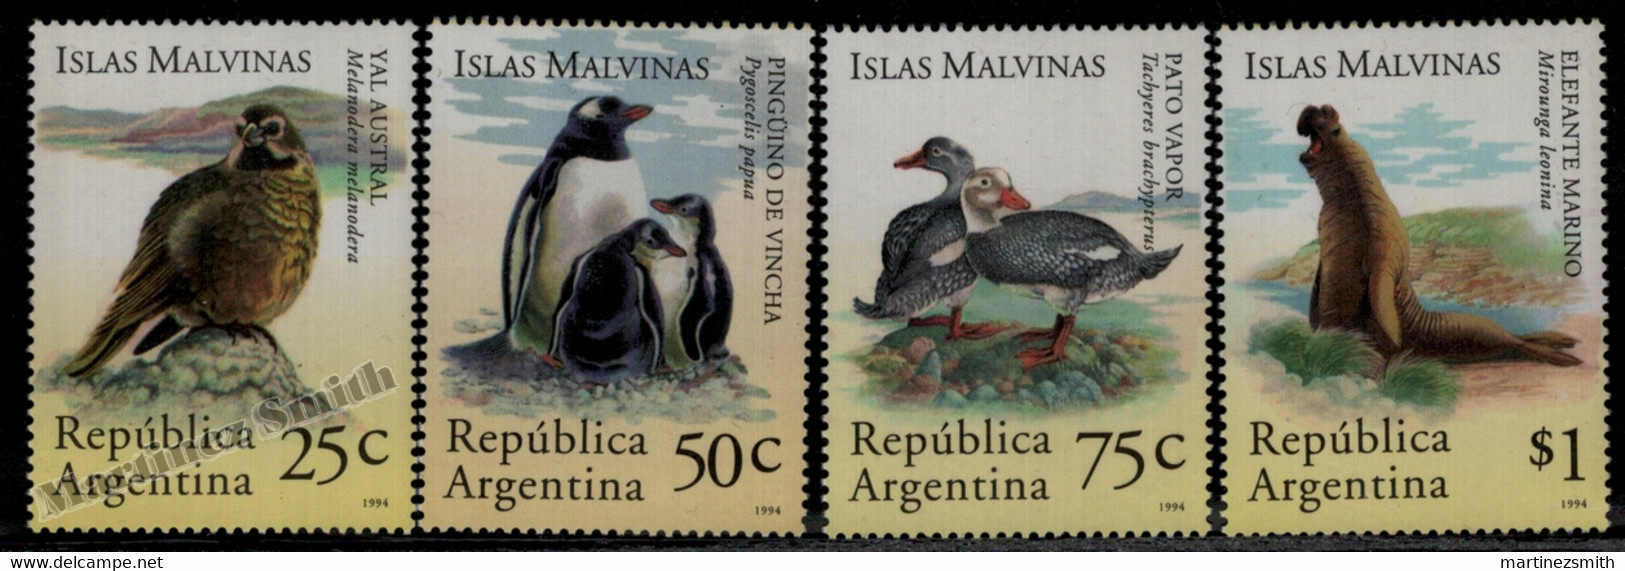 Argentine - Argentina 1994 Yvert 1849-52, Fauna Falkland Islands, Malvinas - MNH - Unused Stamps